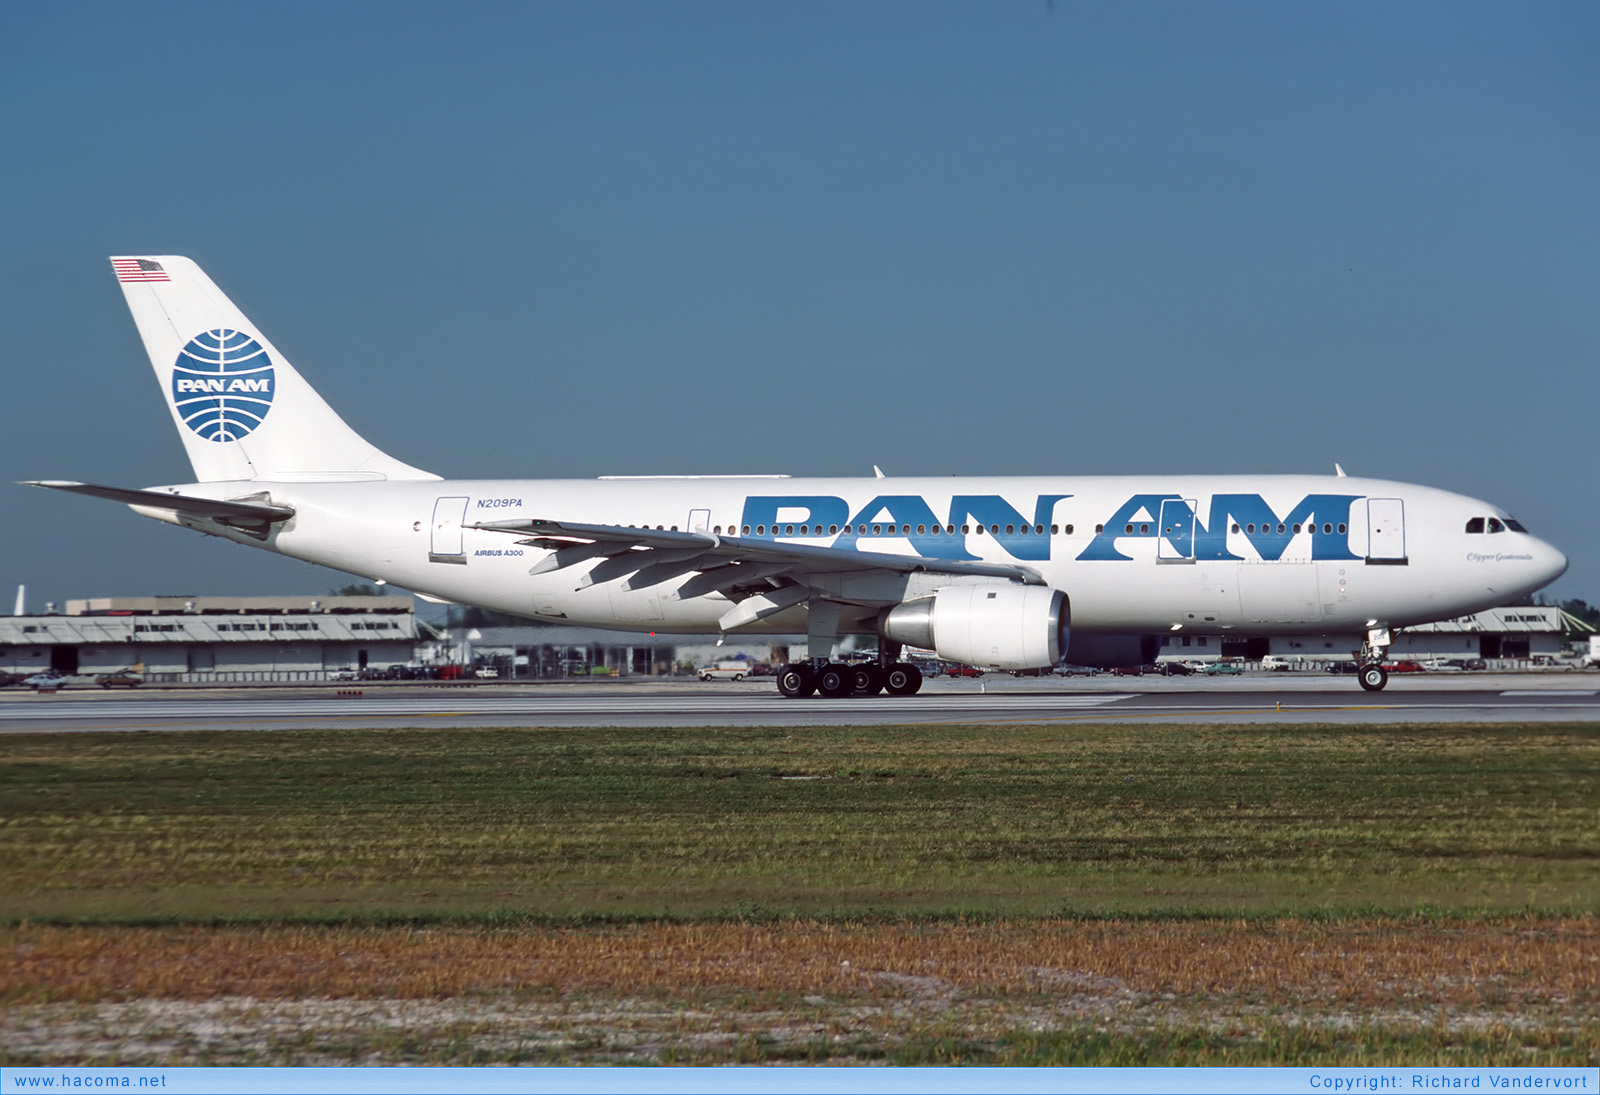 Foto von N209PA - Pan Am Clipper Boston / Guatemala - Miami International Airport - 11.1988